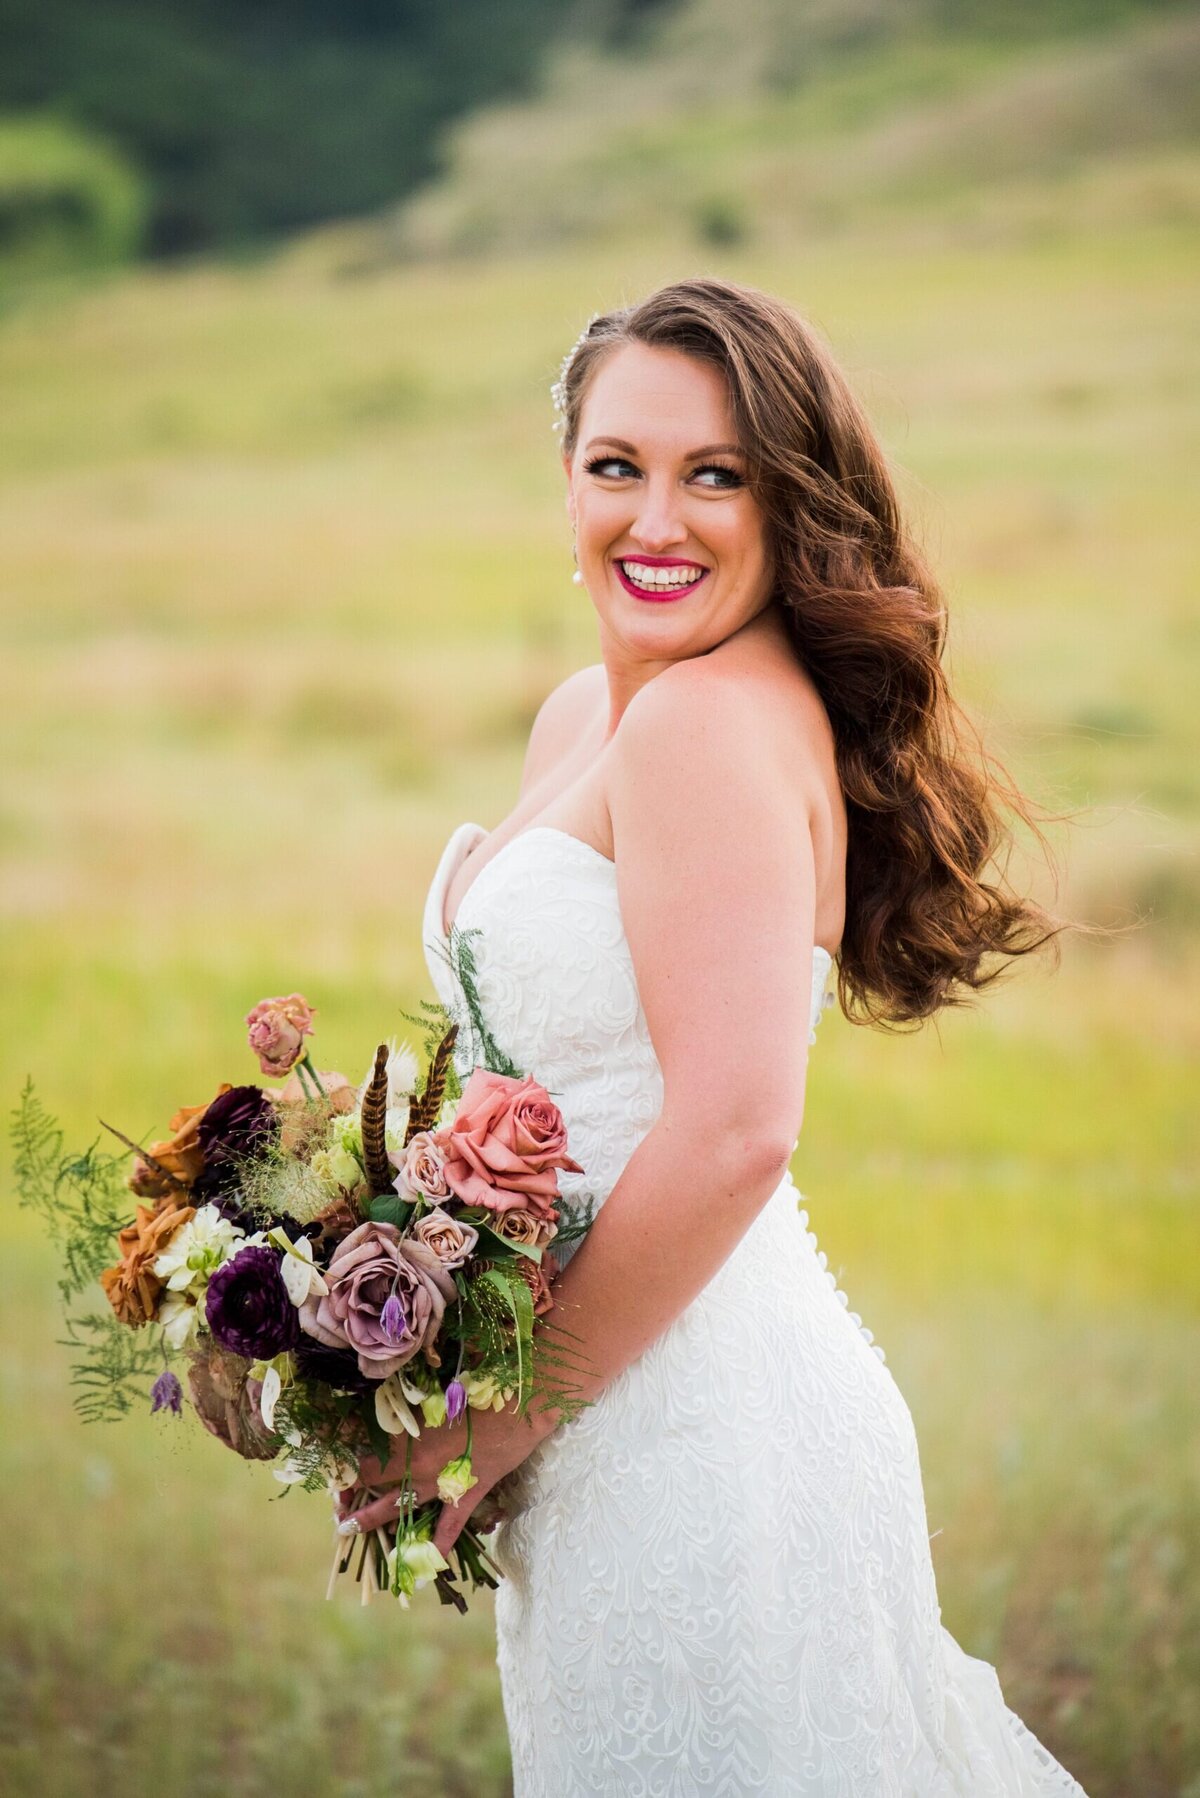 A bride glances over her shoulder, smiling at her groom off camera at The Manor House venue in Denver, Colorado.